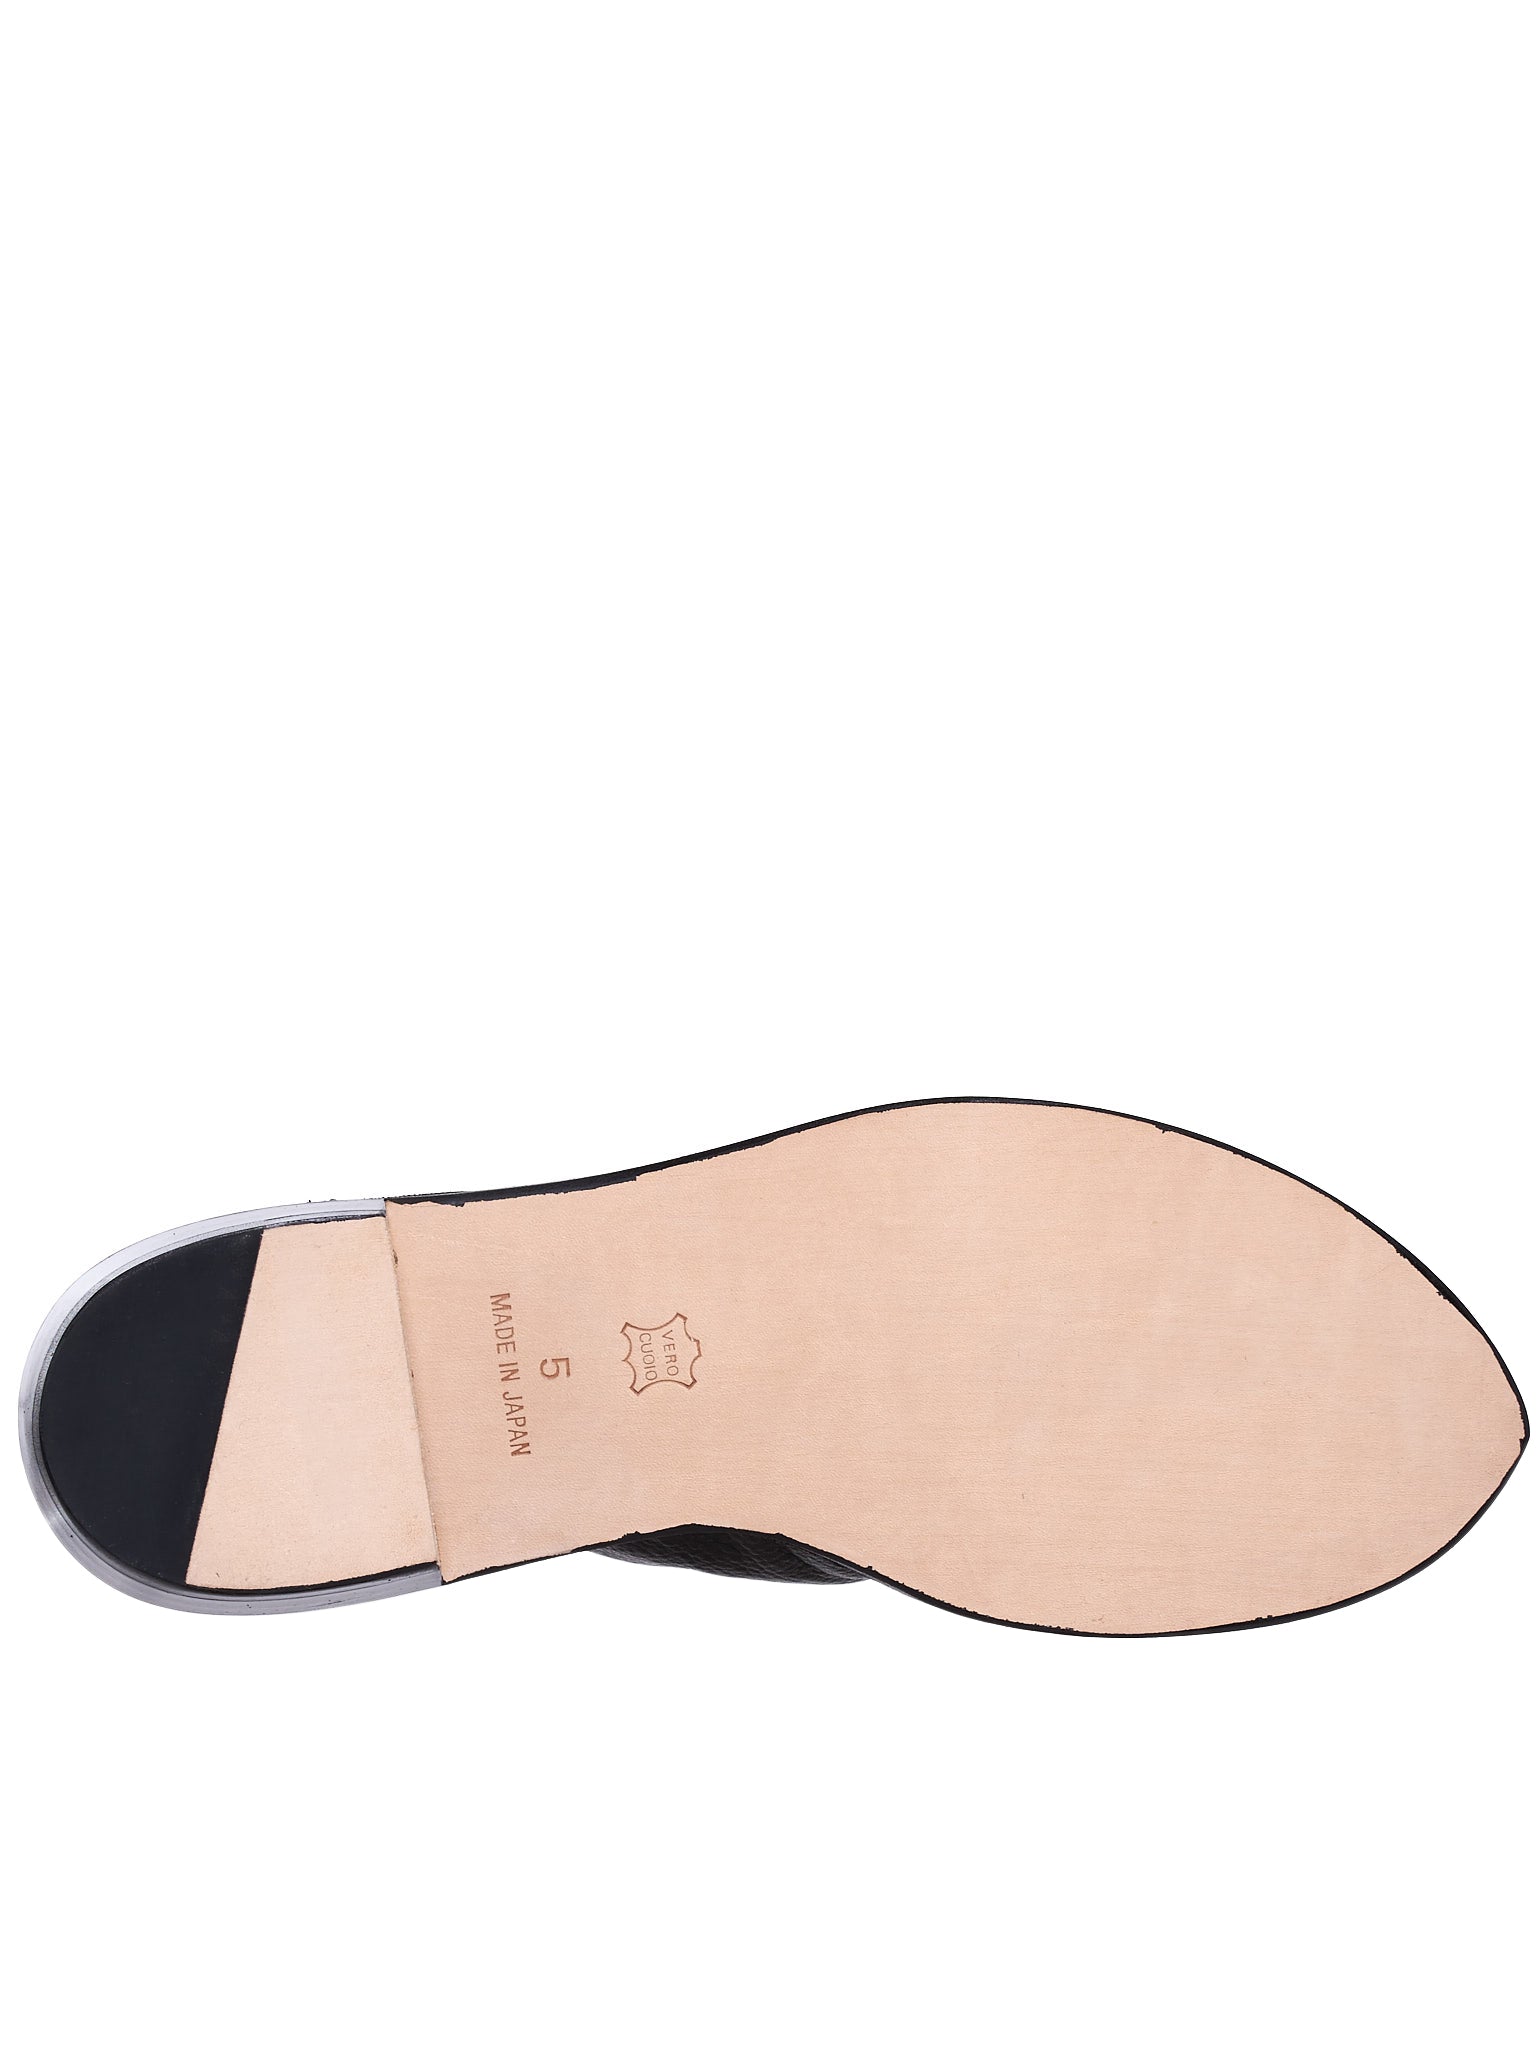 Open-Toe Flats (YS-E03-701-BLACK)